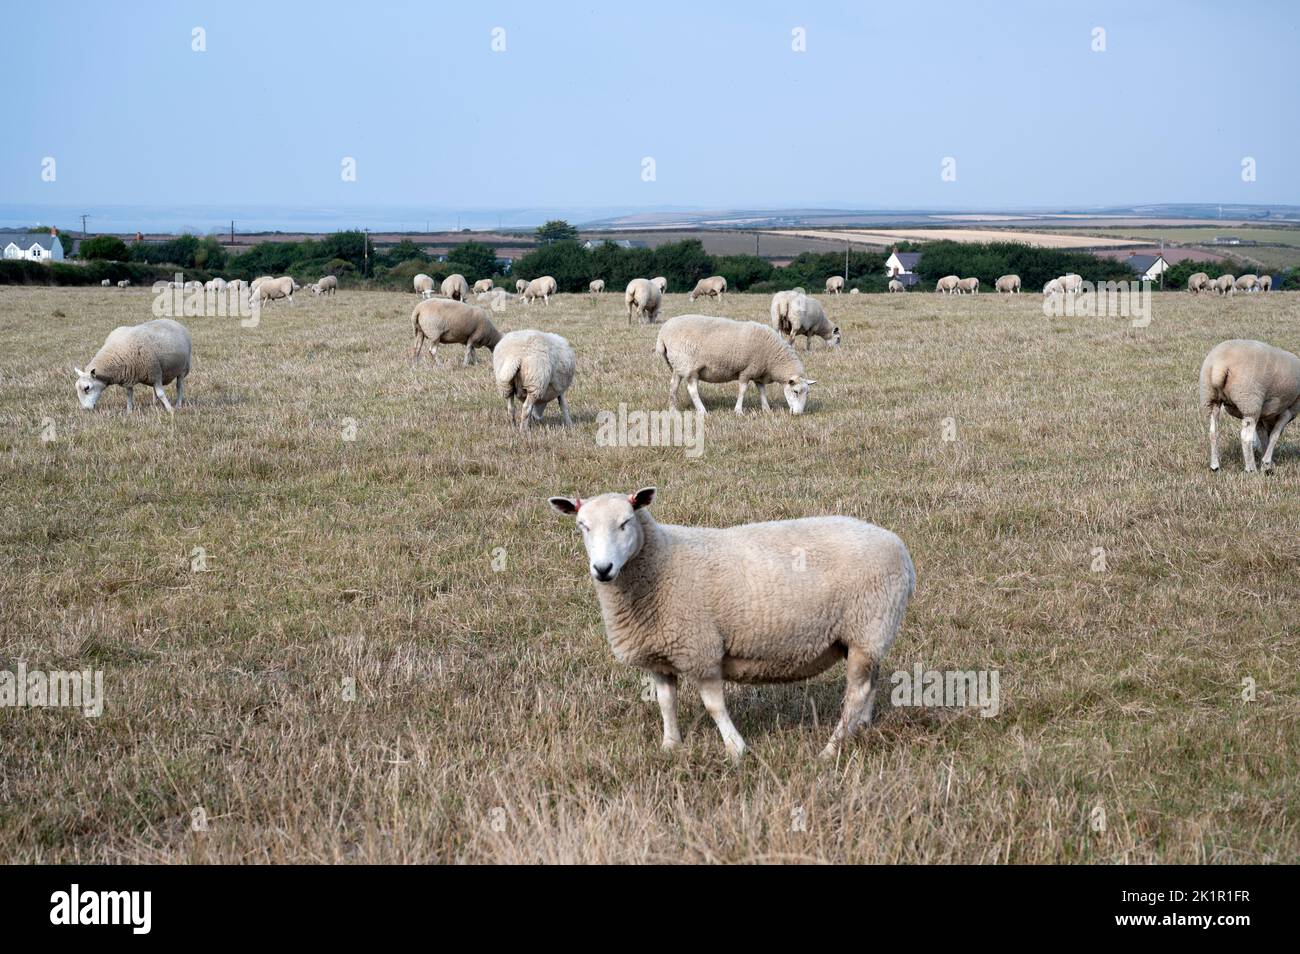 Wales, Pembrokeshire. Sheep grazing. Stock Photo